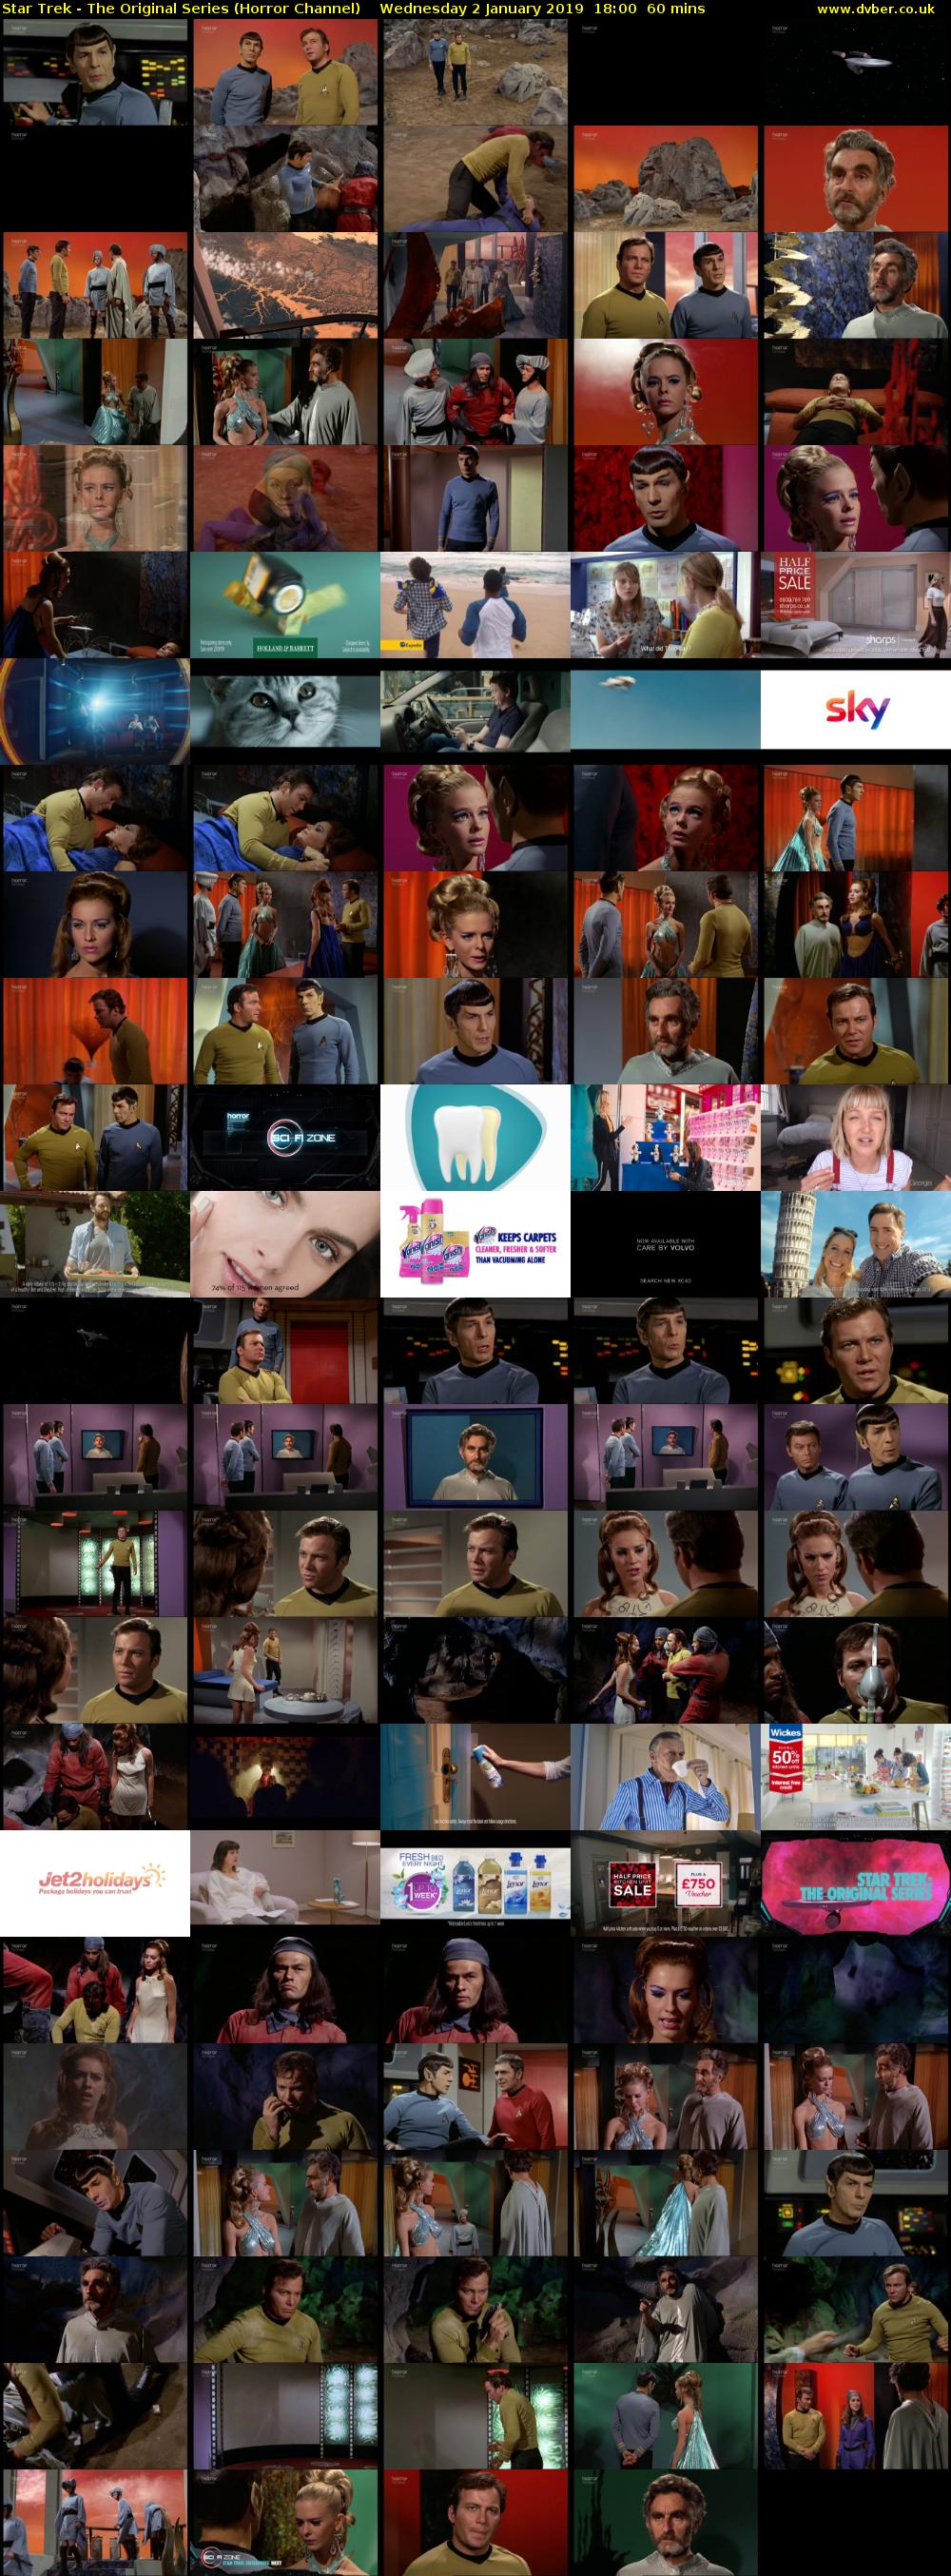 Star Trek - The Original Series (Horror Channel) Wednesday 2 January 2019 18:00 - 19:00